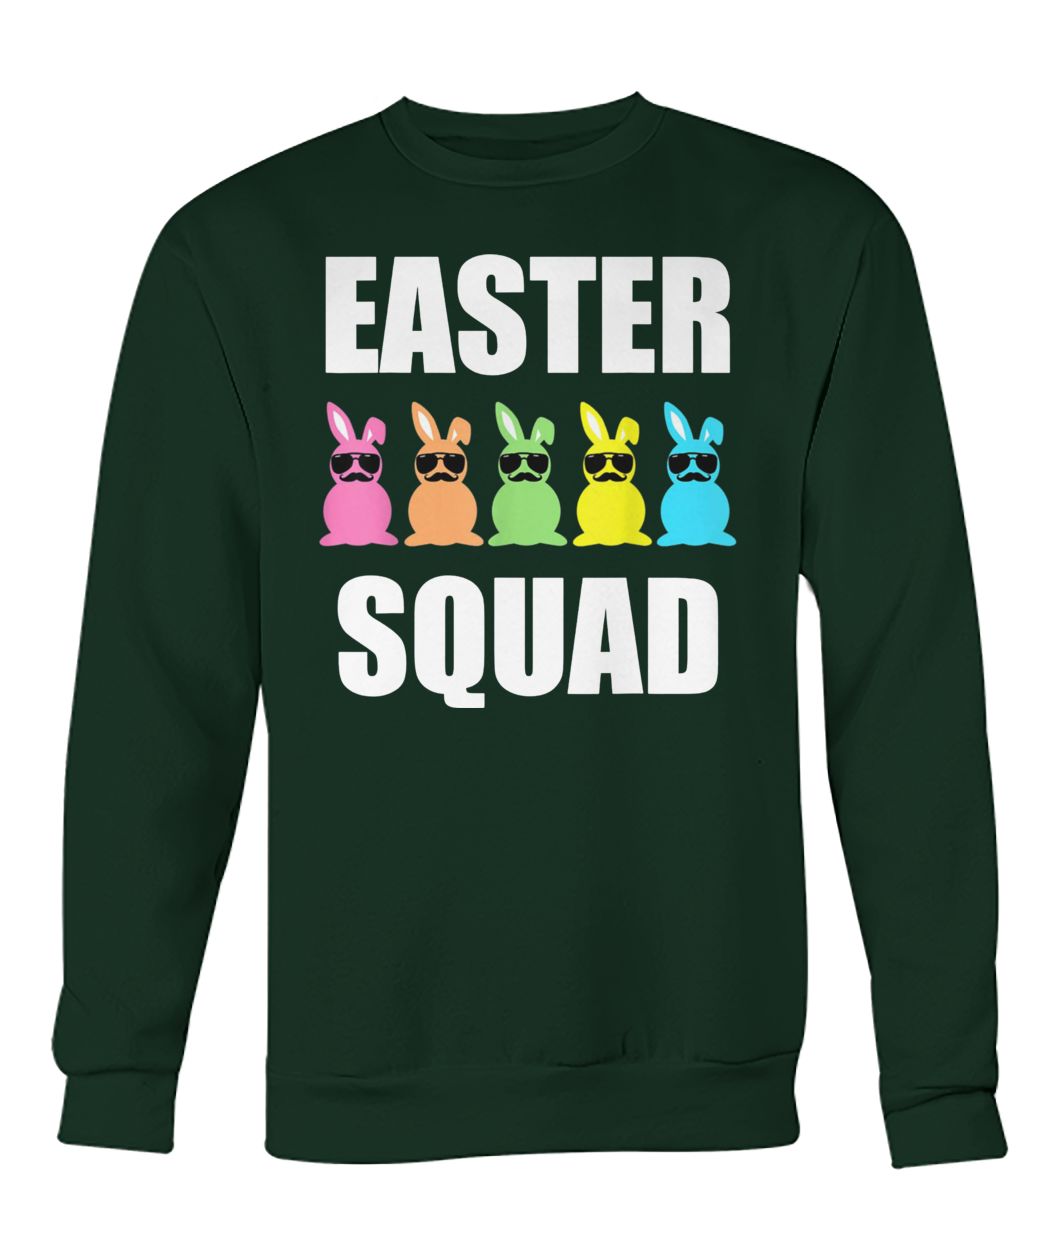 Easter bunny squad crew neck sweatshirt